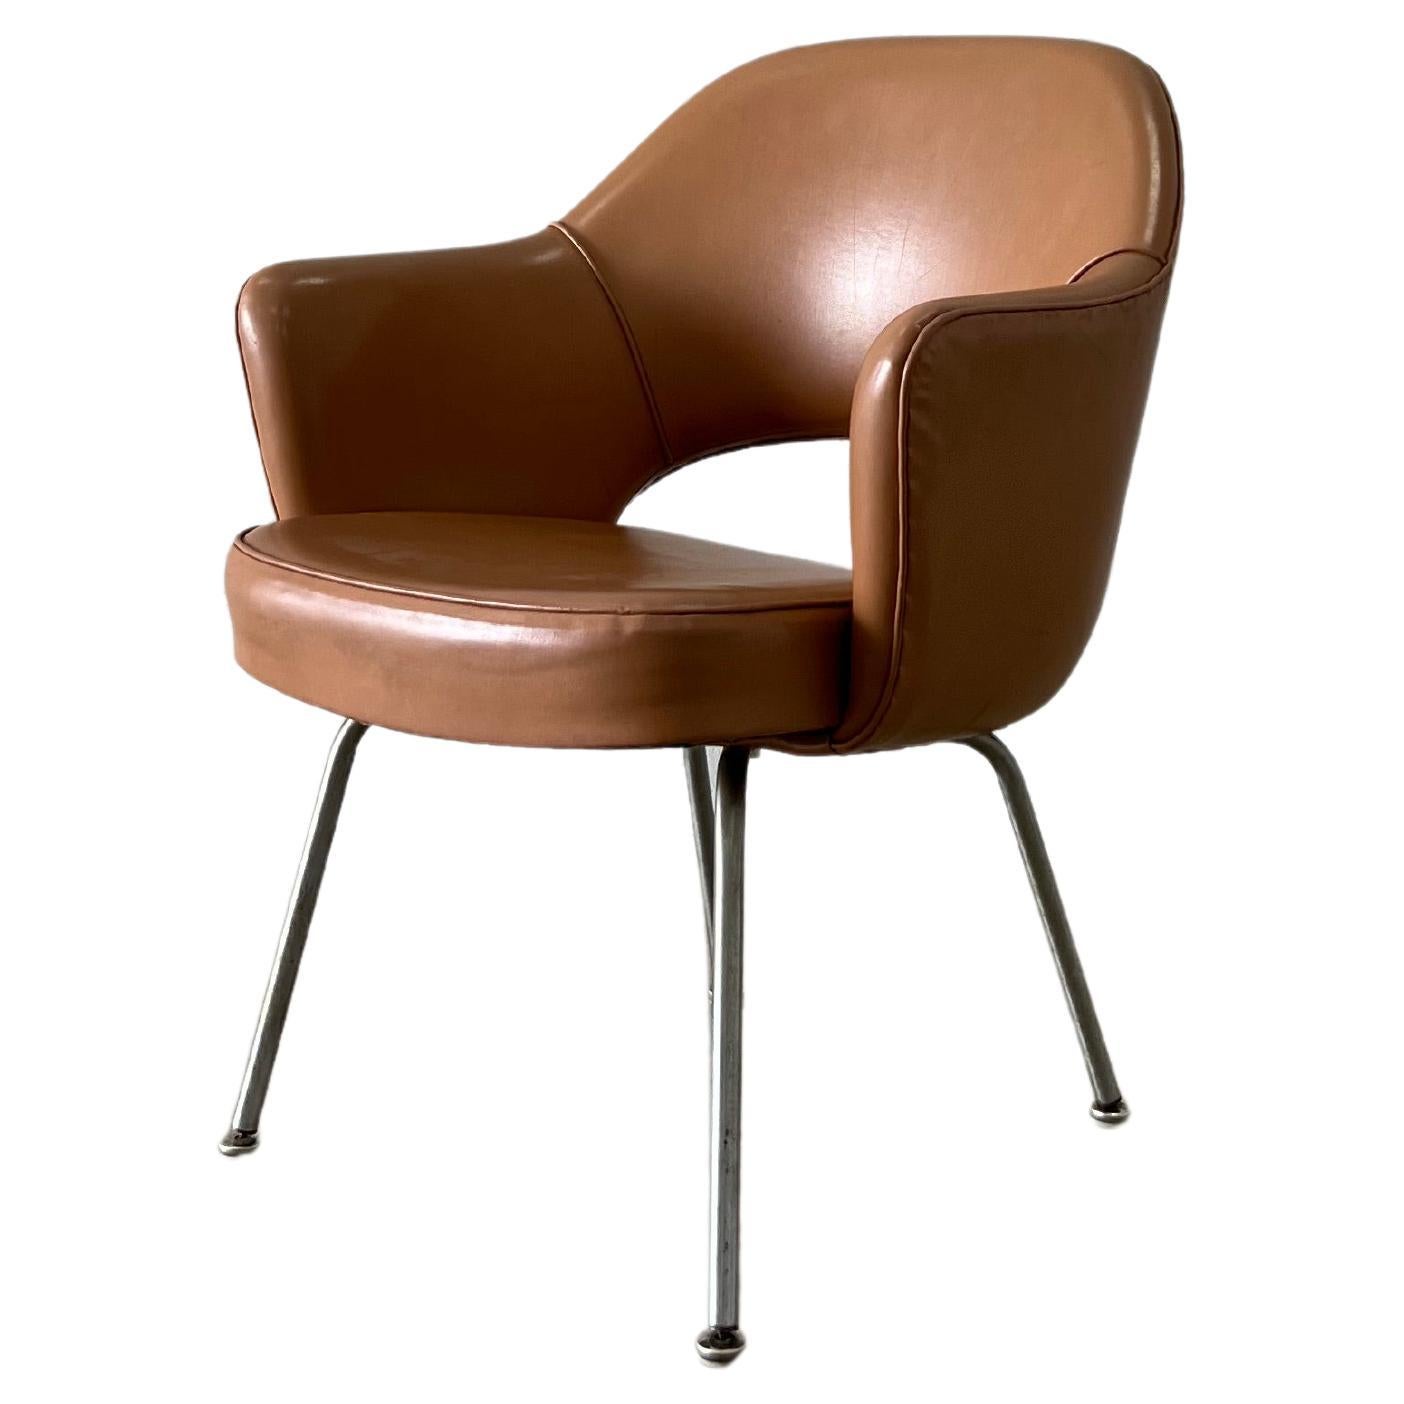 Model 71 Executive Chair by Eero Saarinen for Knoll